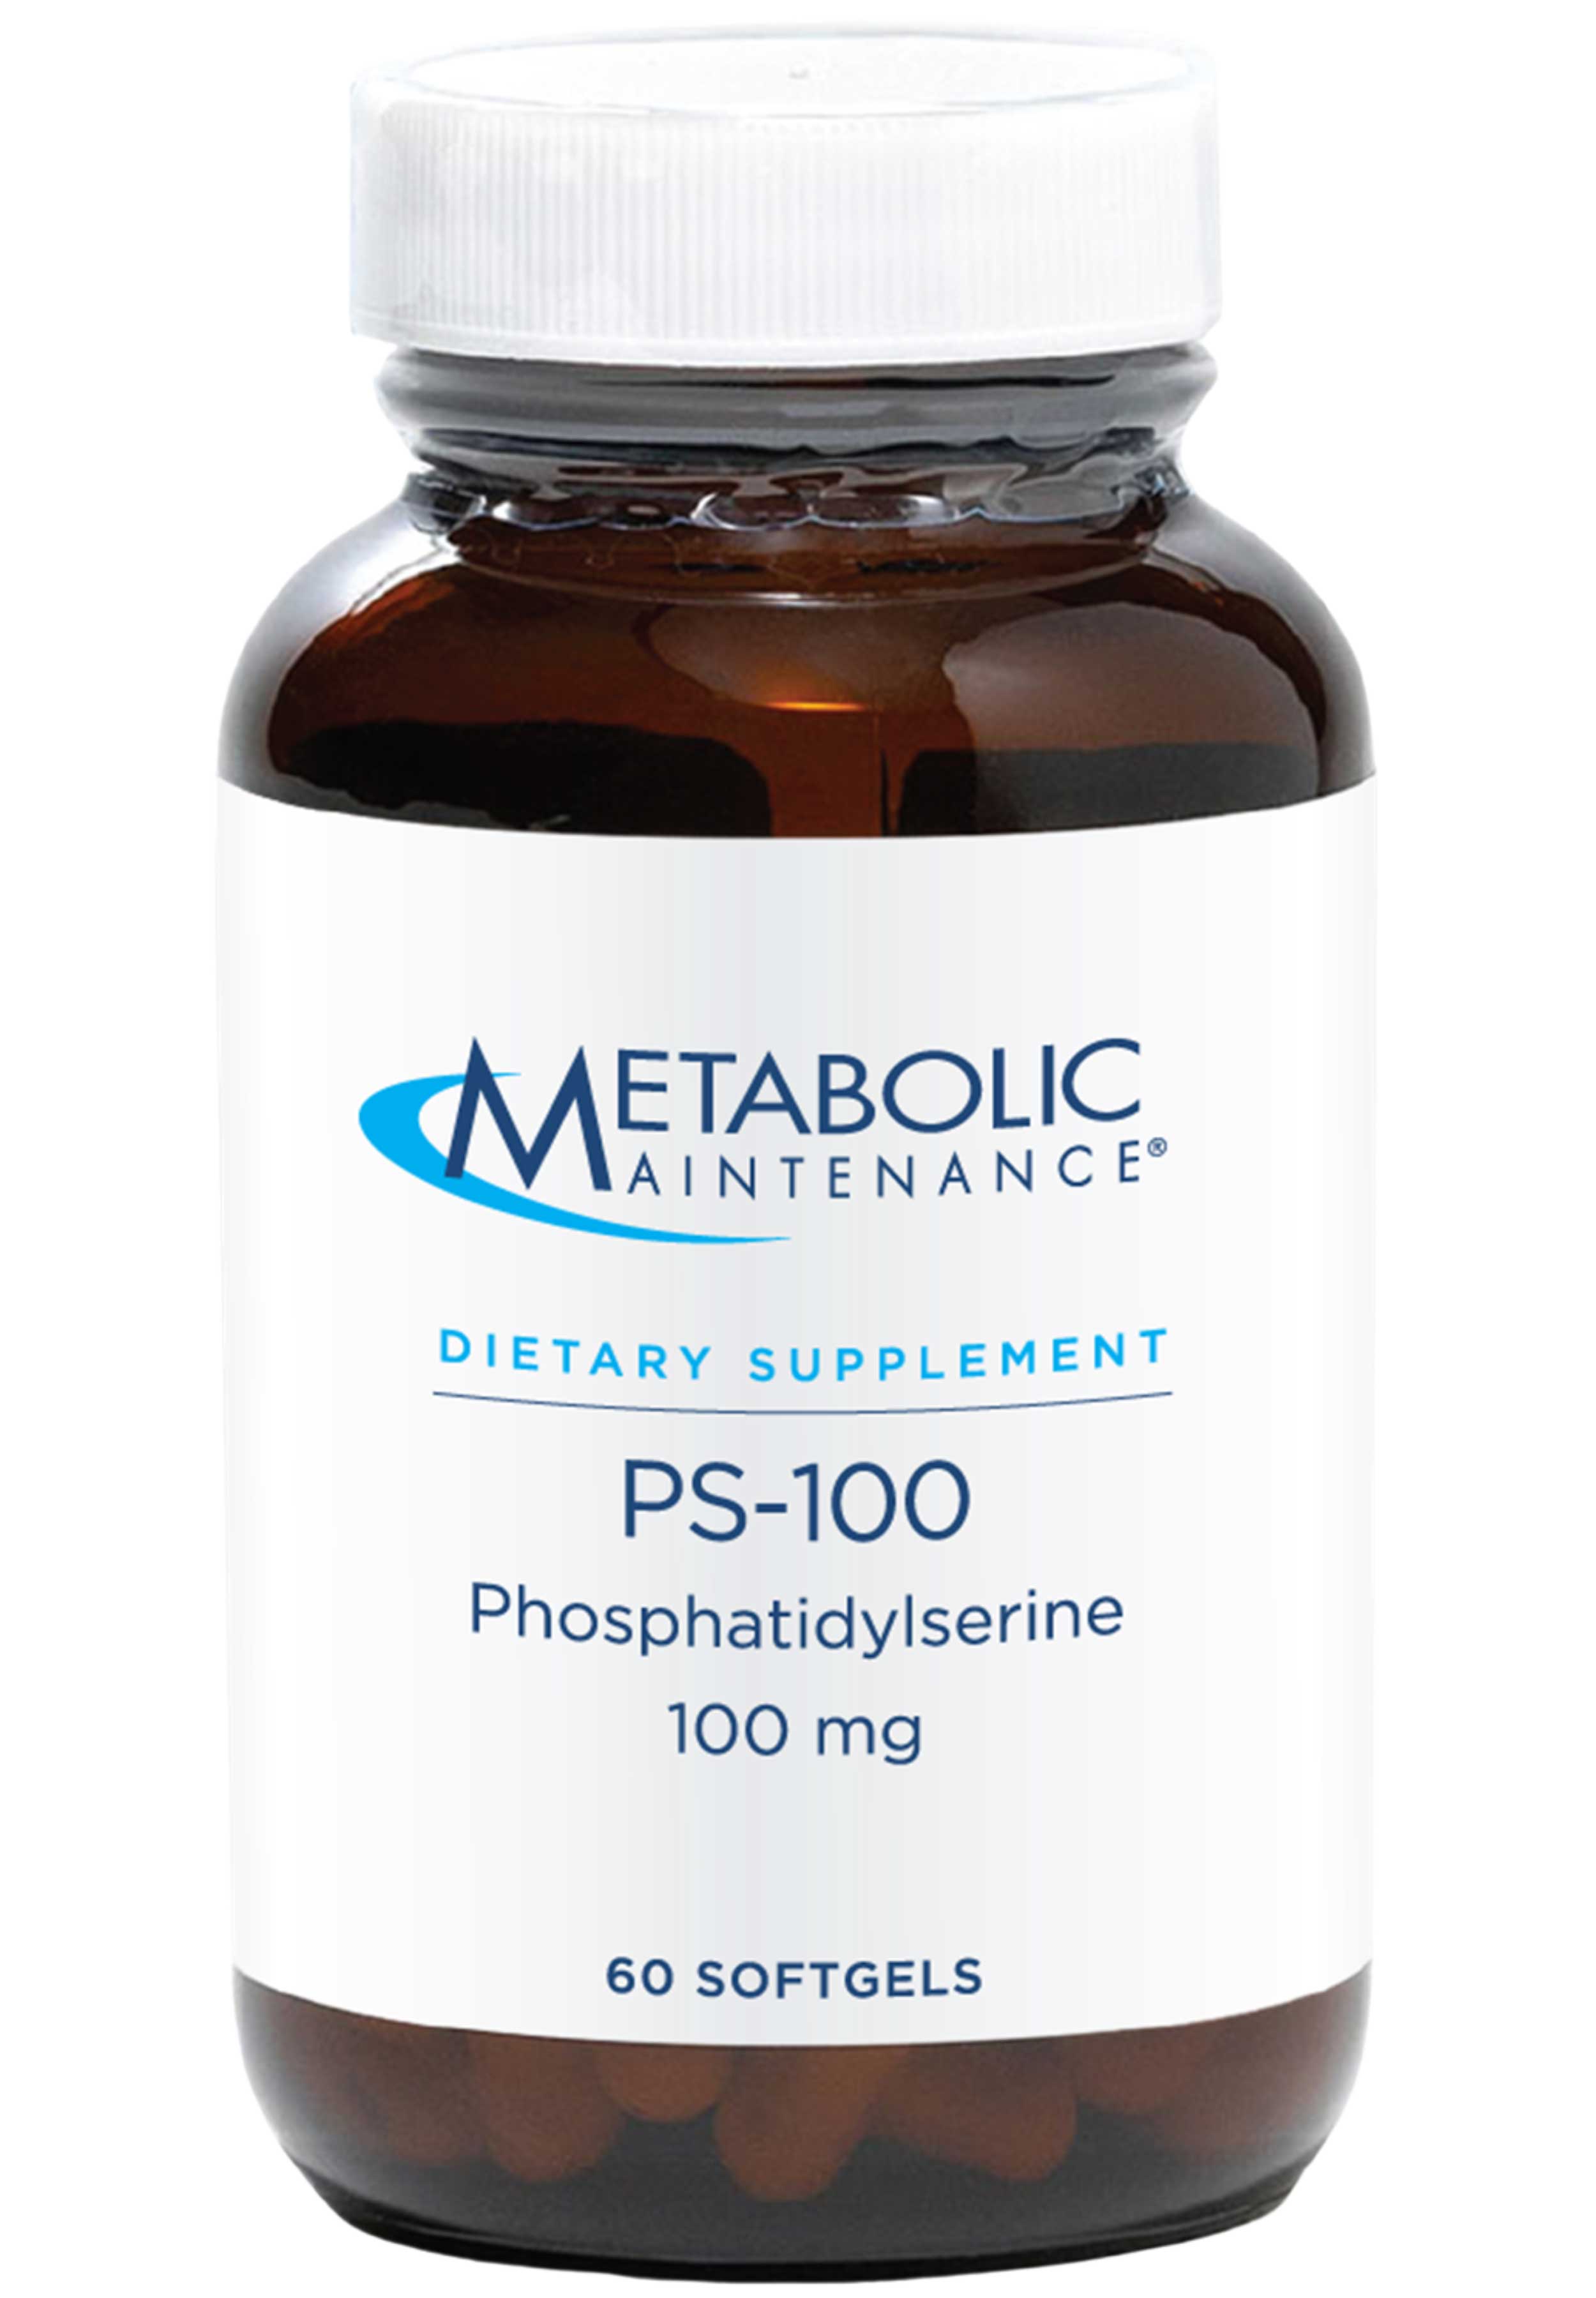 Metabolic Maintenance PS-100